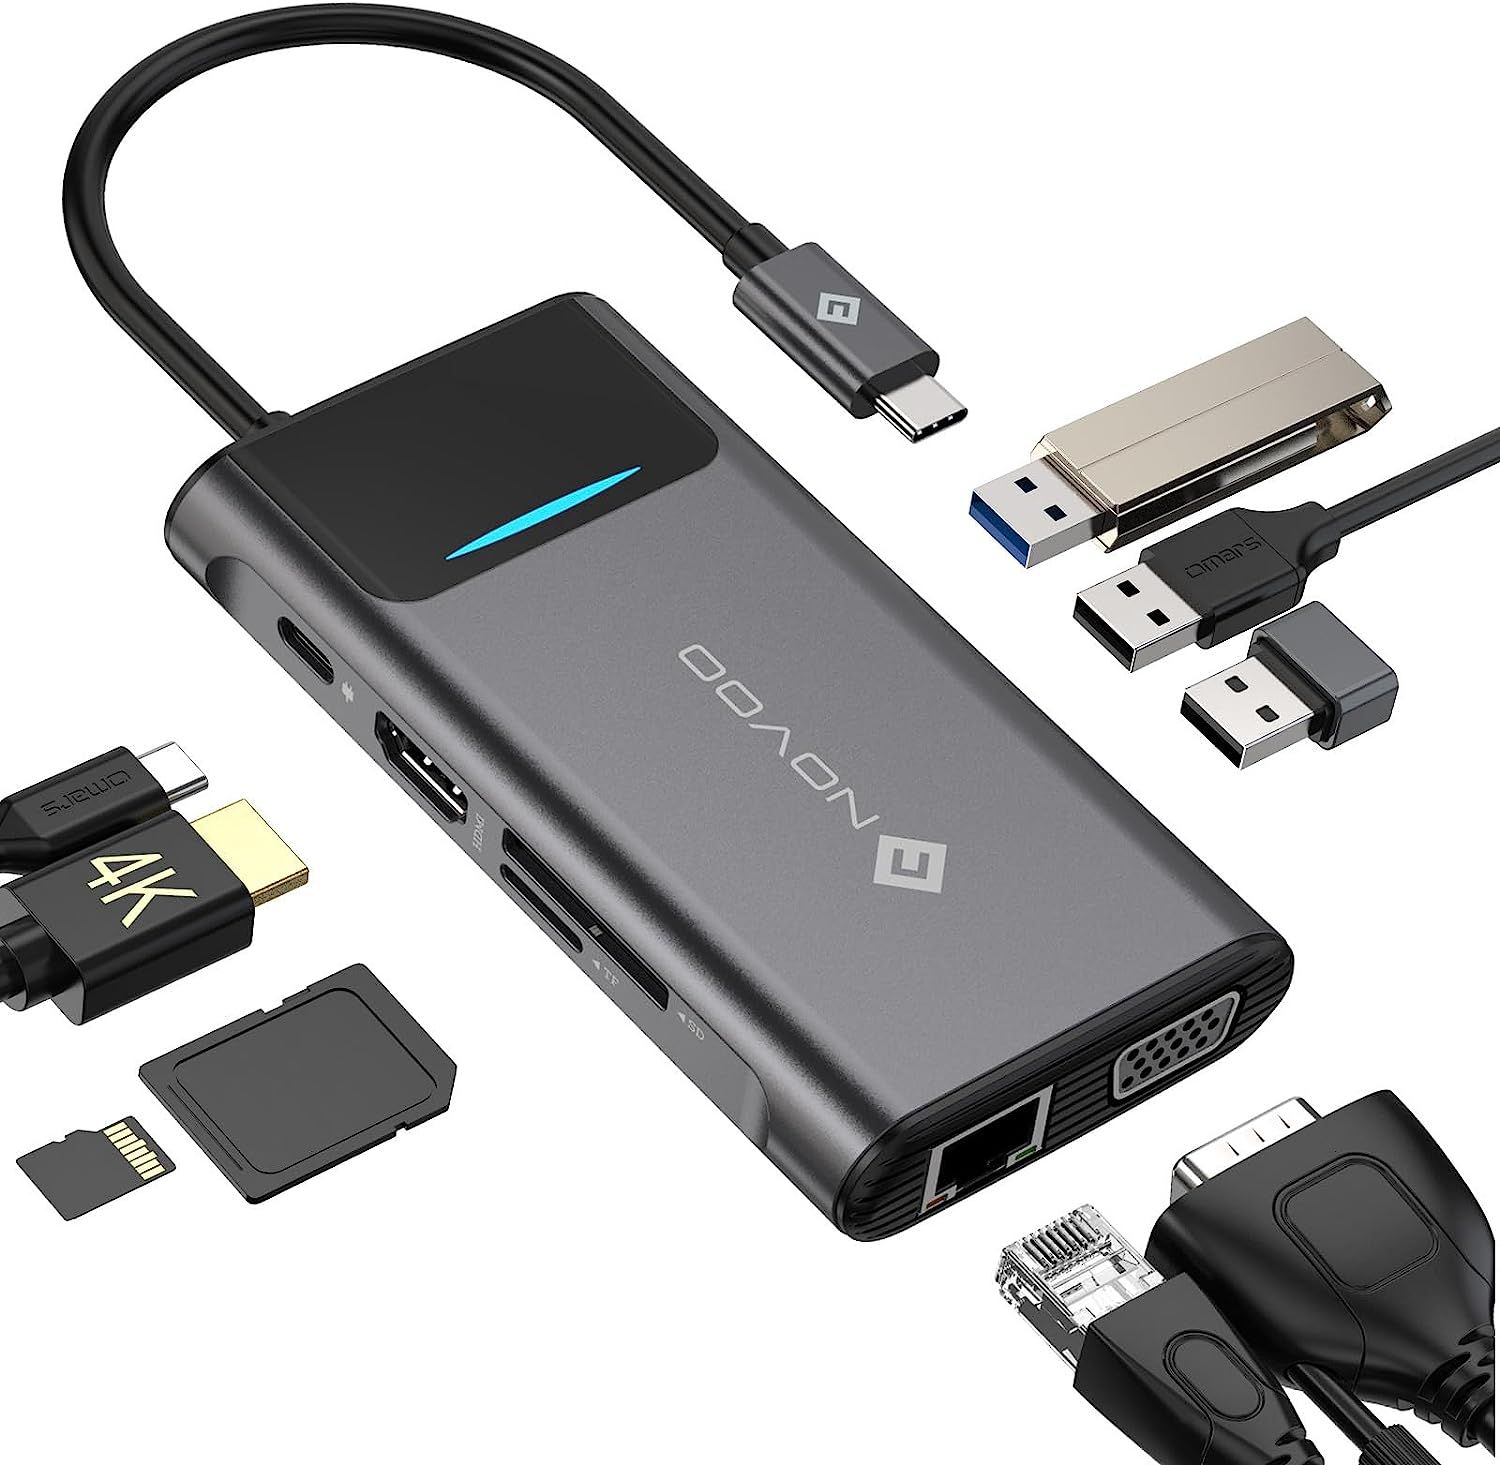 Hub USB Raidsonic 4 ports USB3.0 avec interrupteur, avec